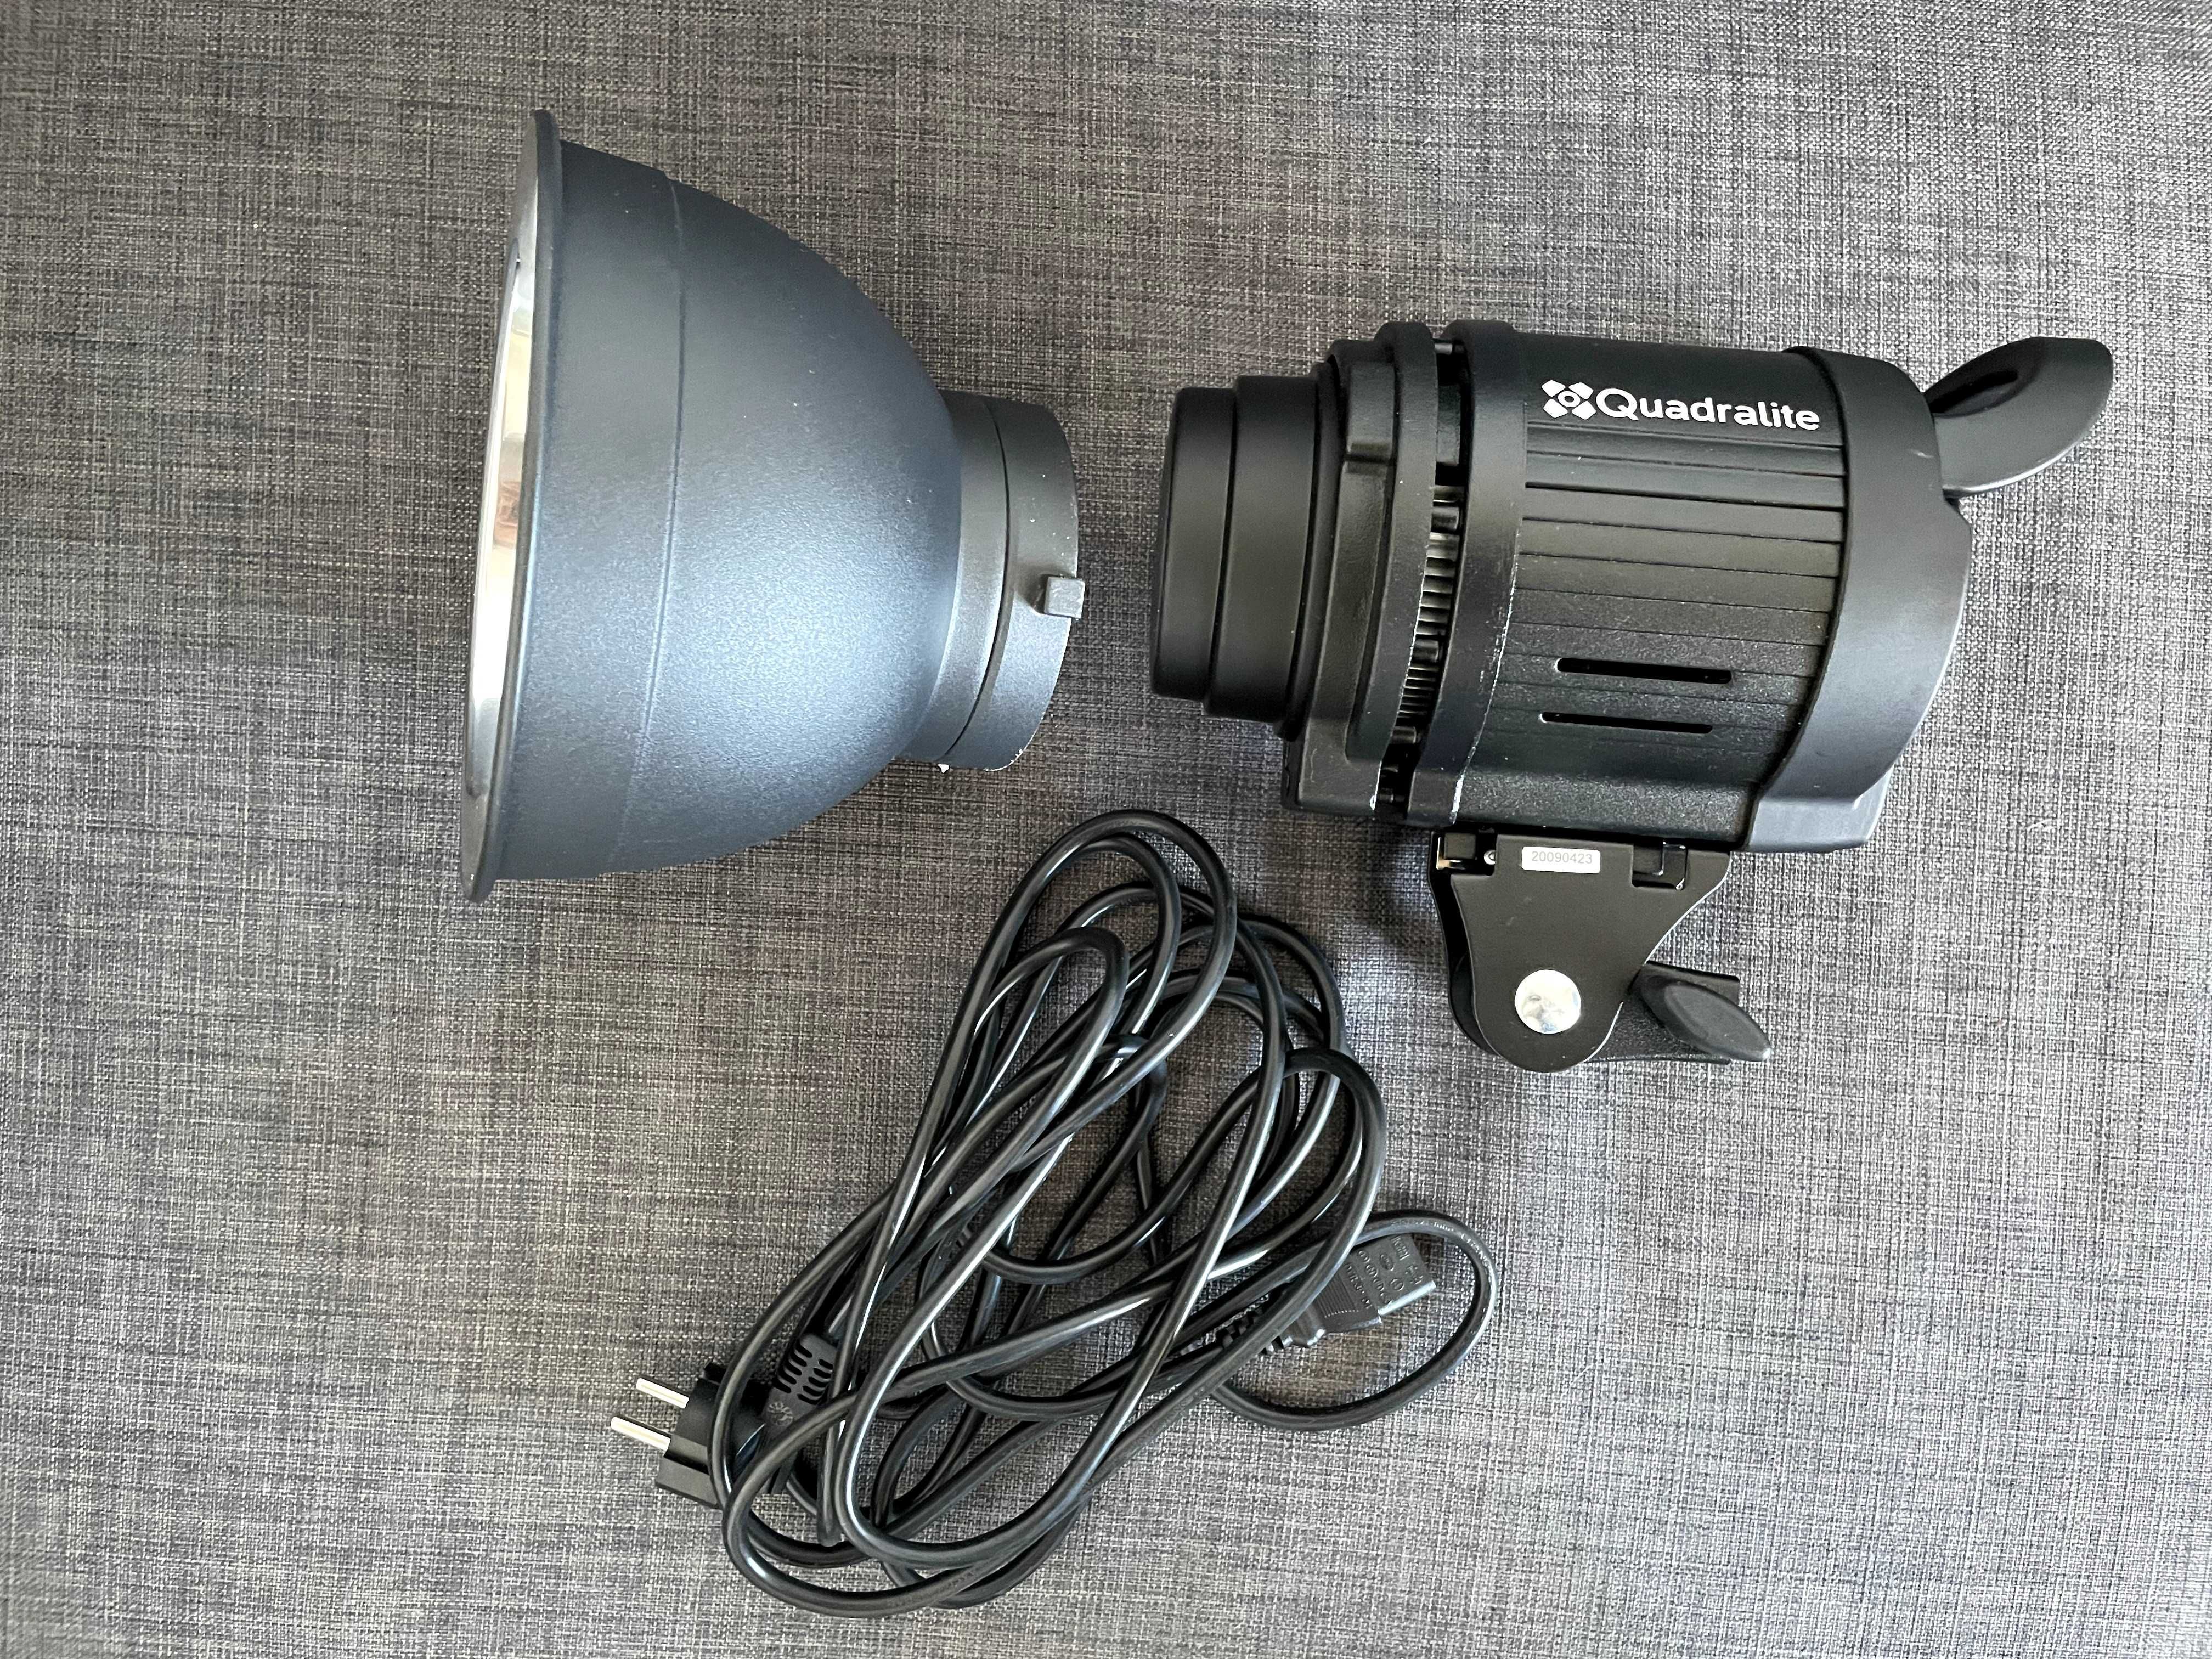 Lampa Quadralite VideoLED 600, lampa światła ciągłego do video/foto